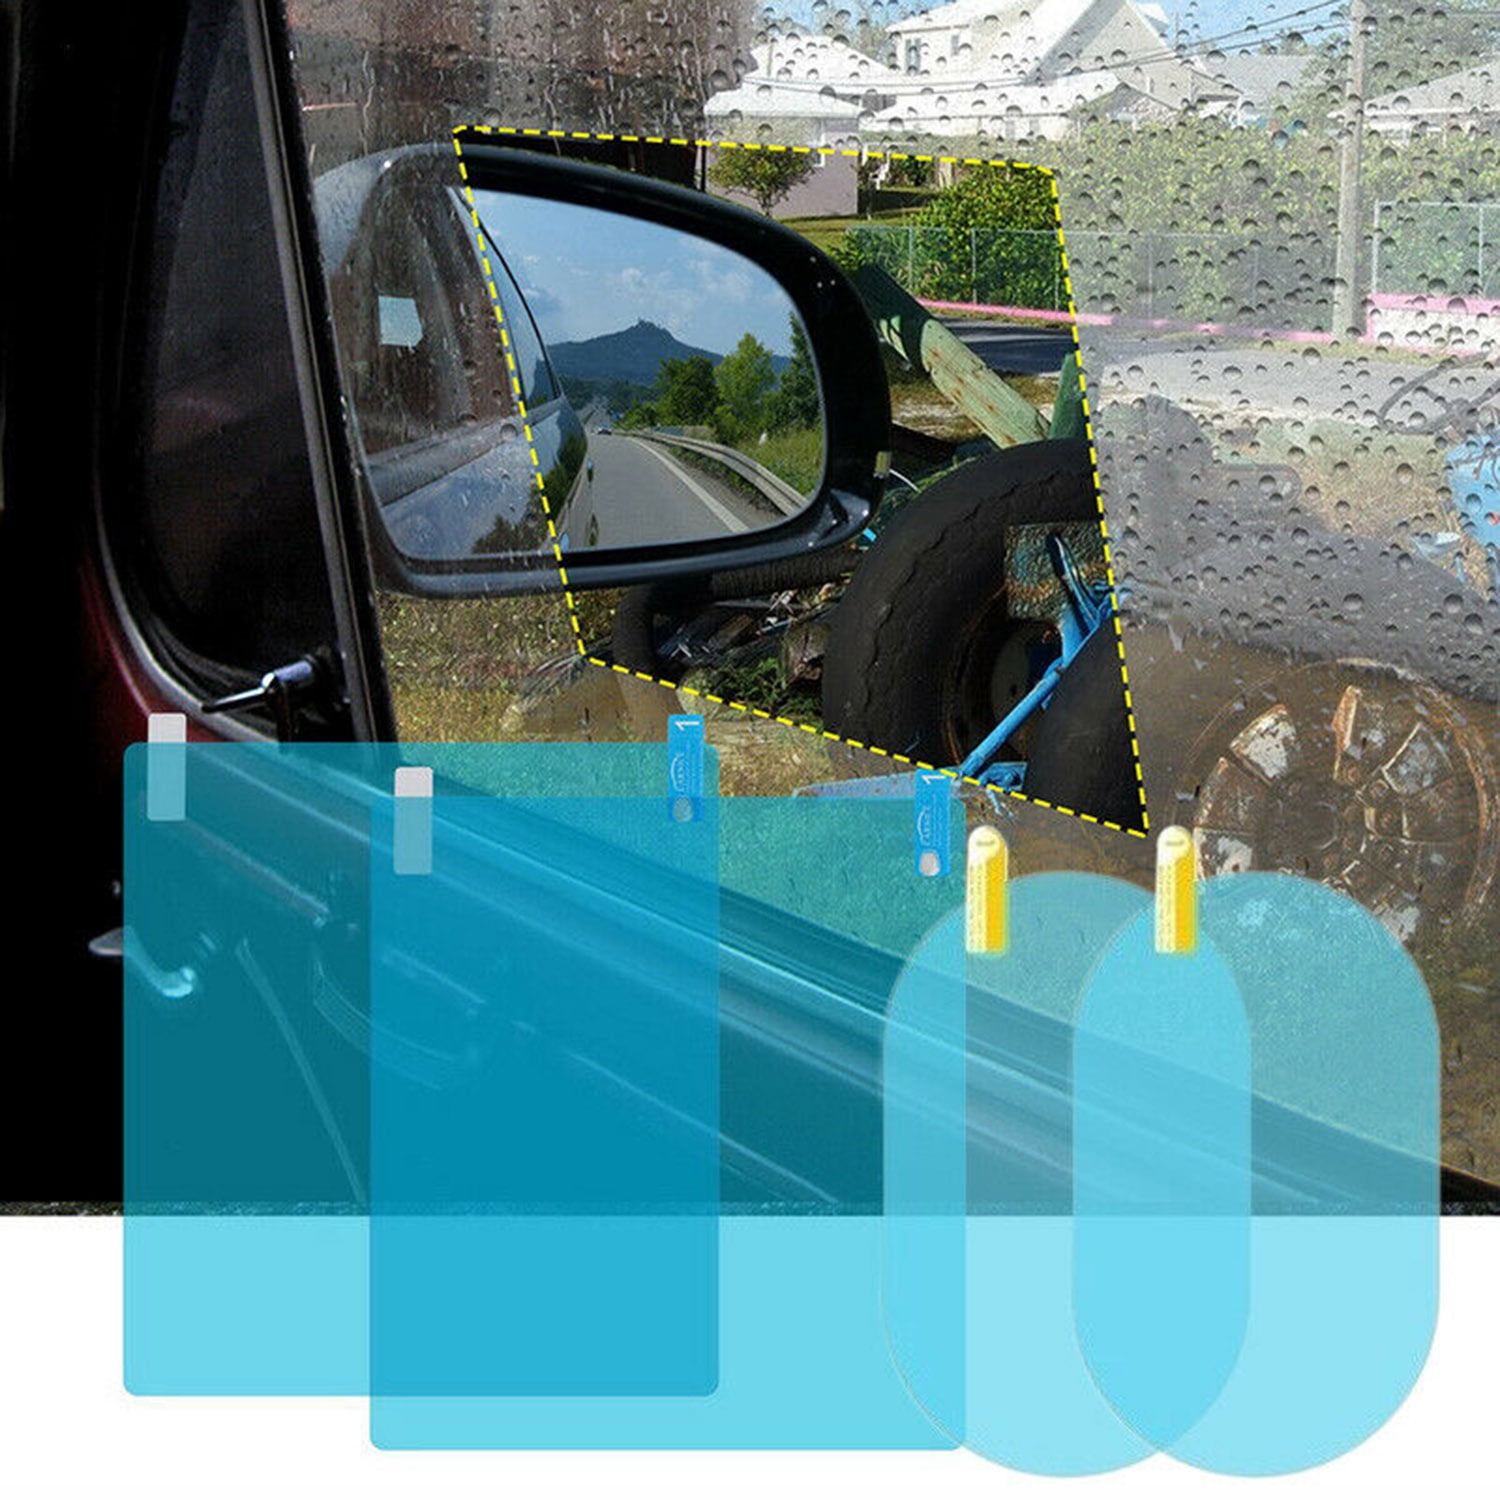 Details about   Car Rear View Mirror Side Window Glass Protective Film Anti Fog Rainproof 4PCS 